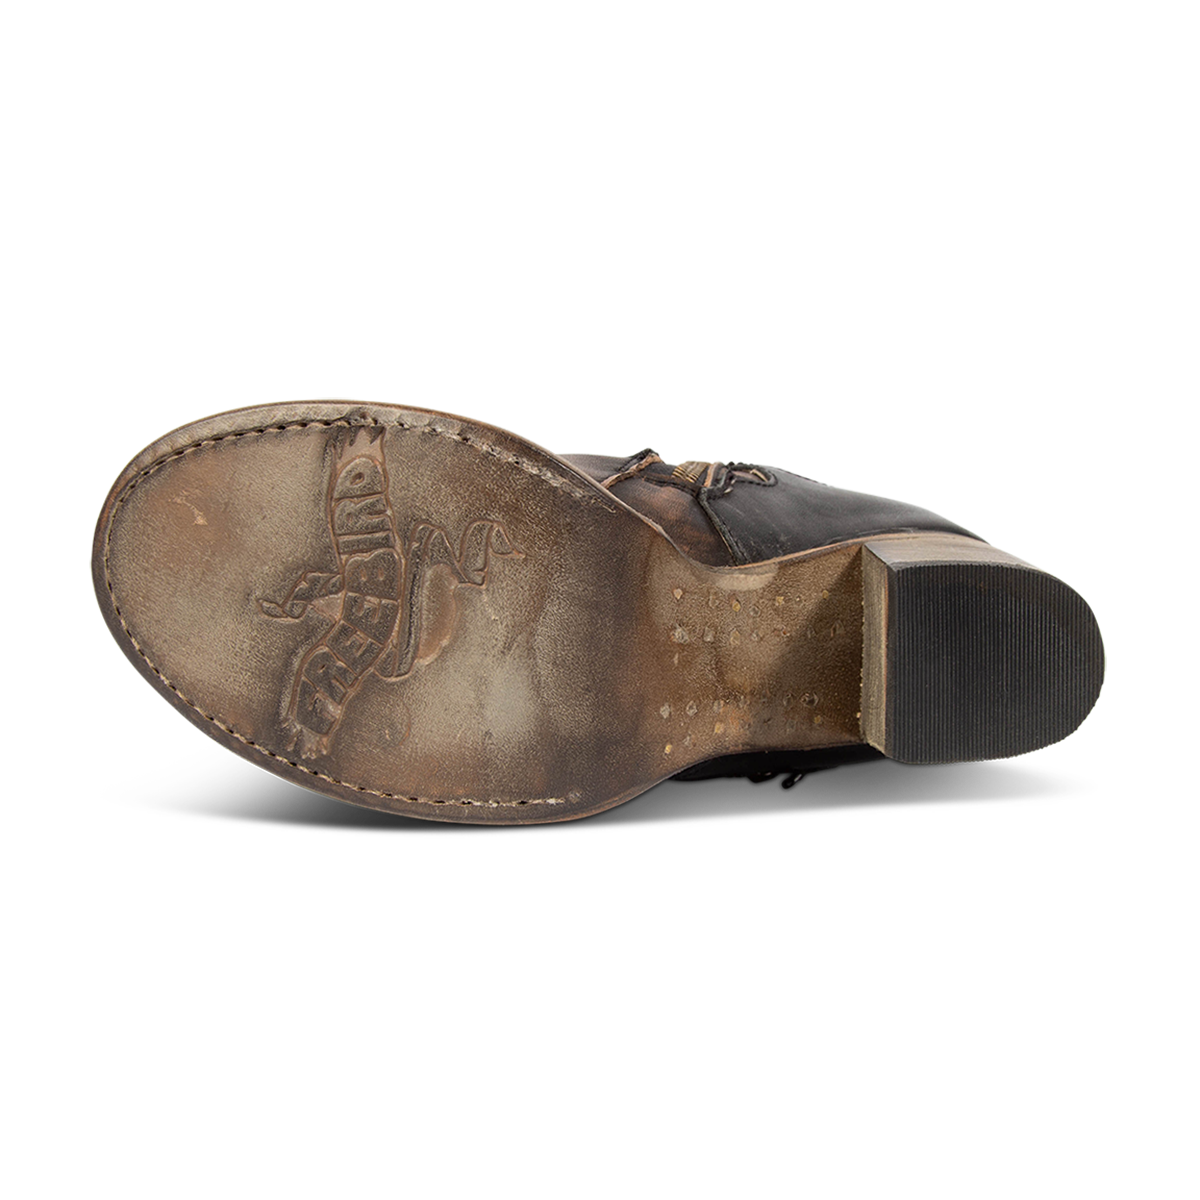 Leather sole imprinted with FREEBIRD on women's Berkley black knee high boot